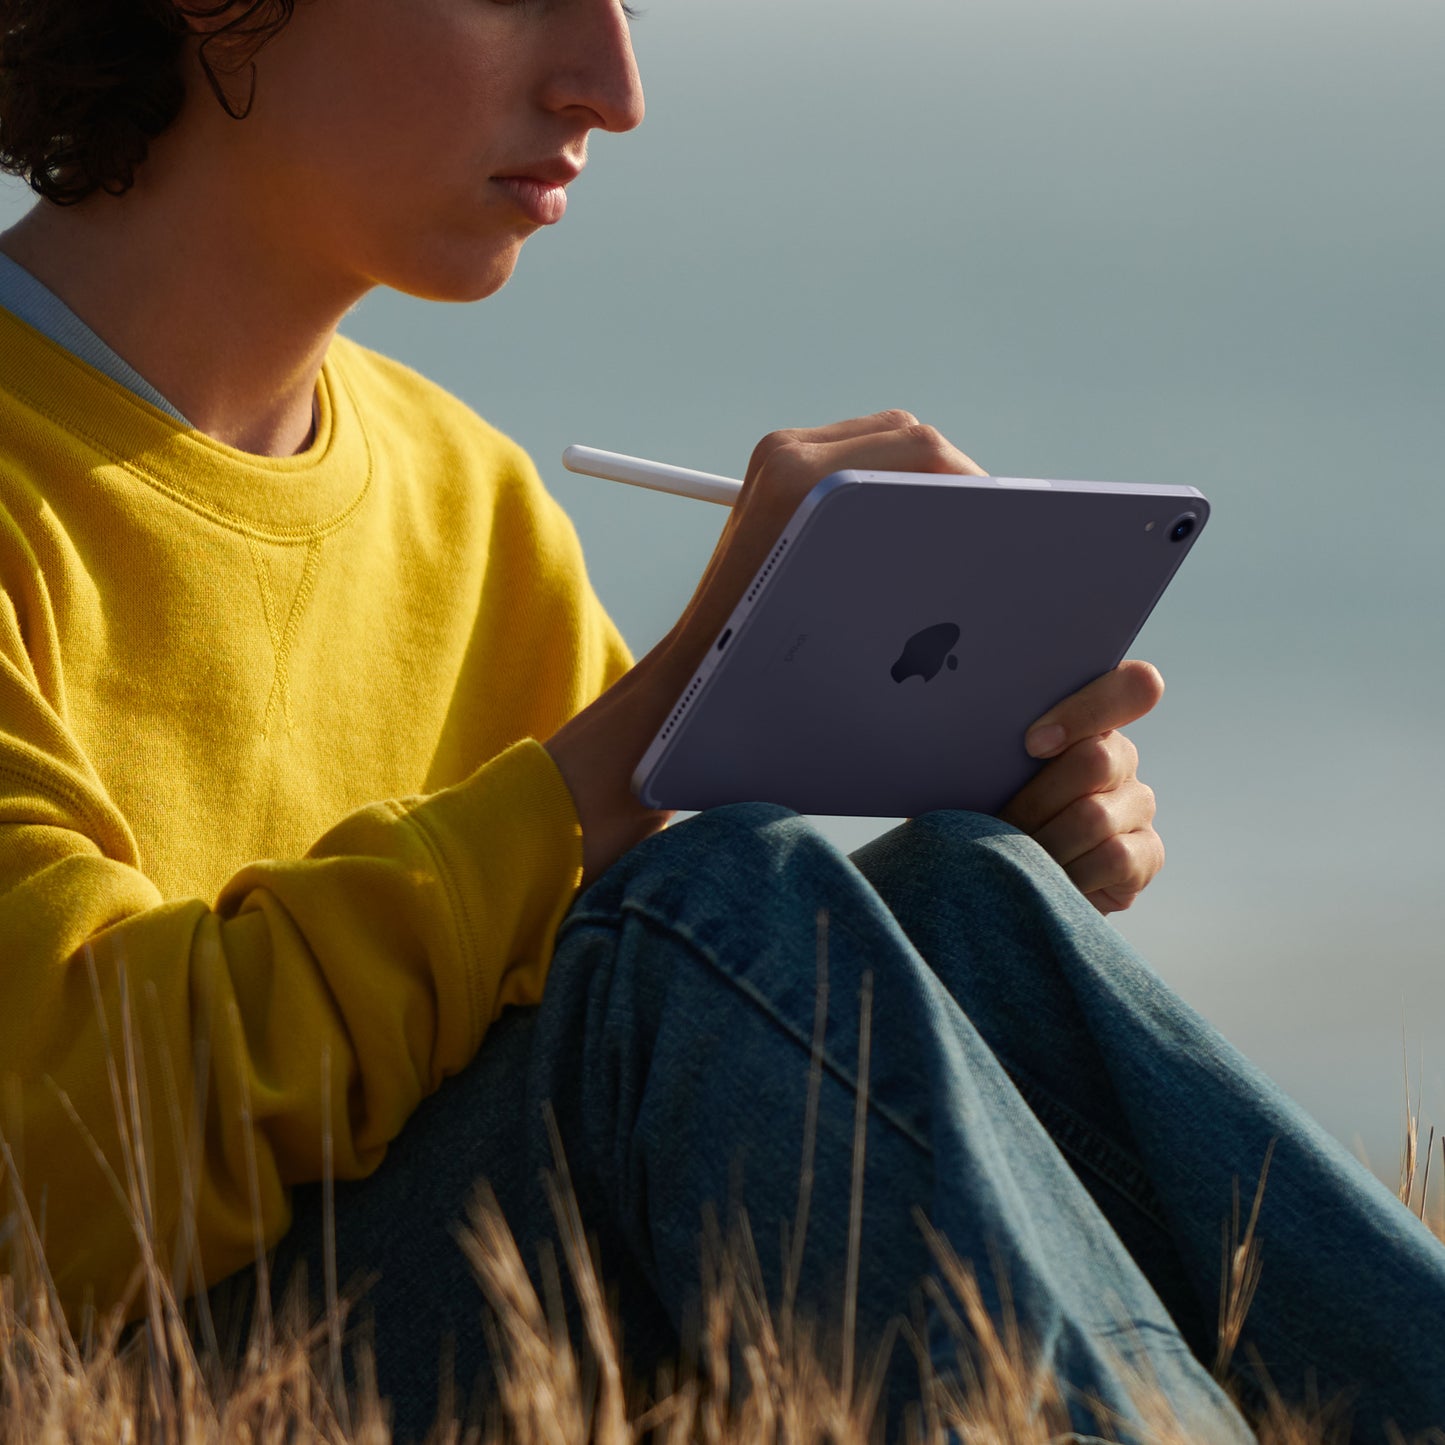 2021 8,3-inch iPad mini, Wi-Fi + Cellular, 256 GB, roze (6e generatie)